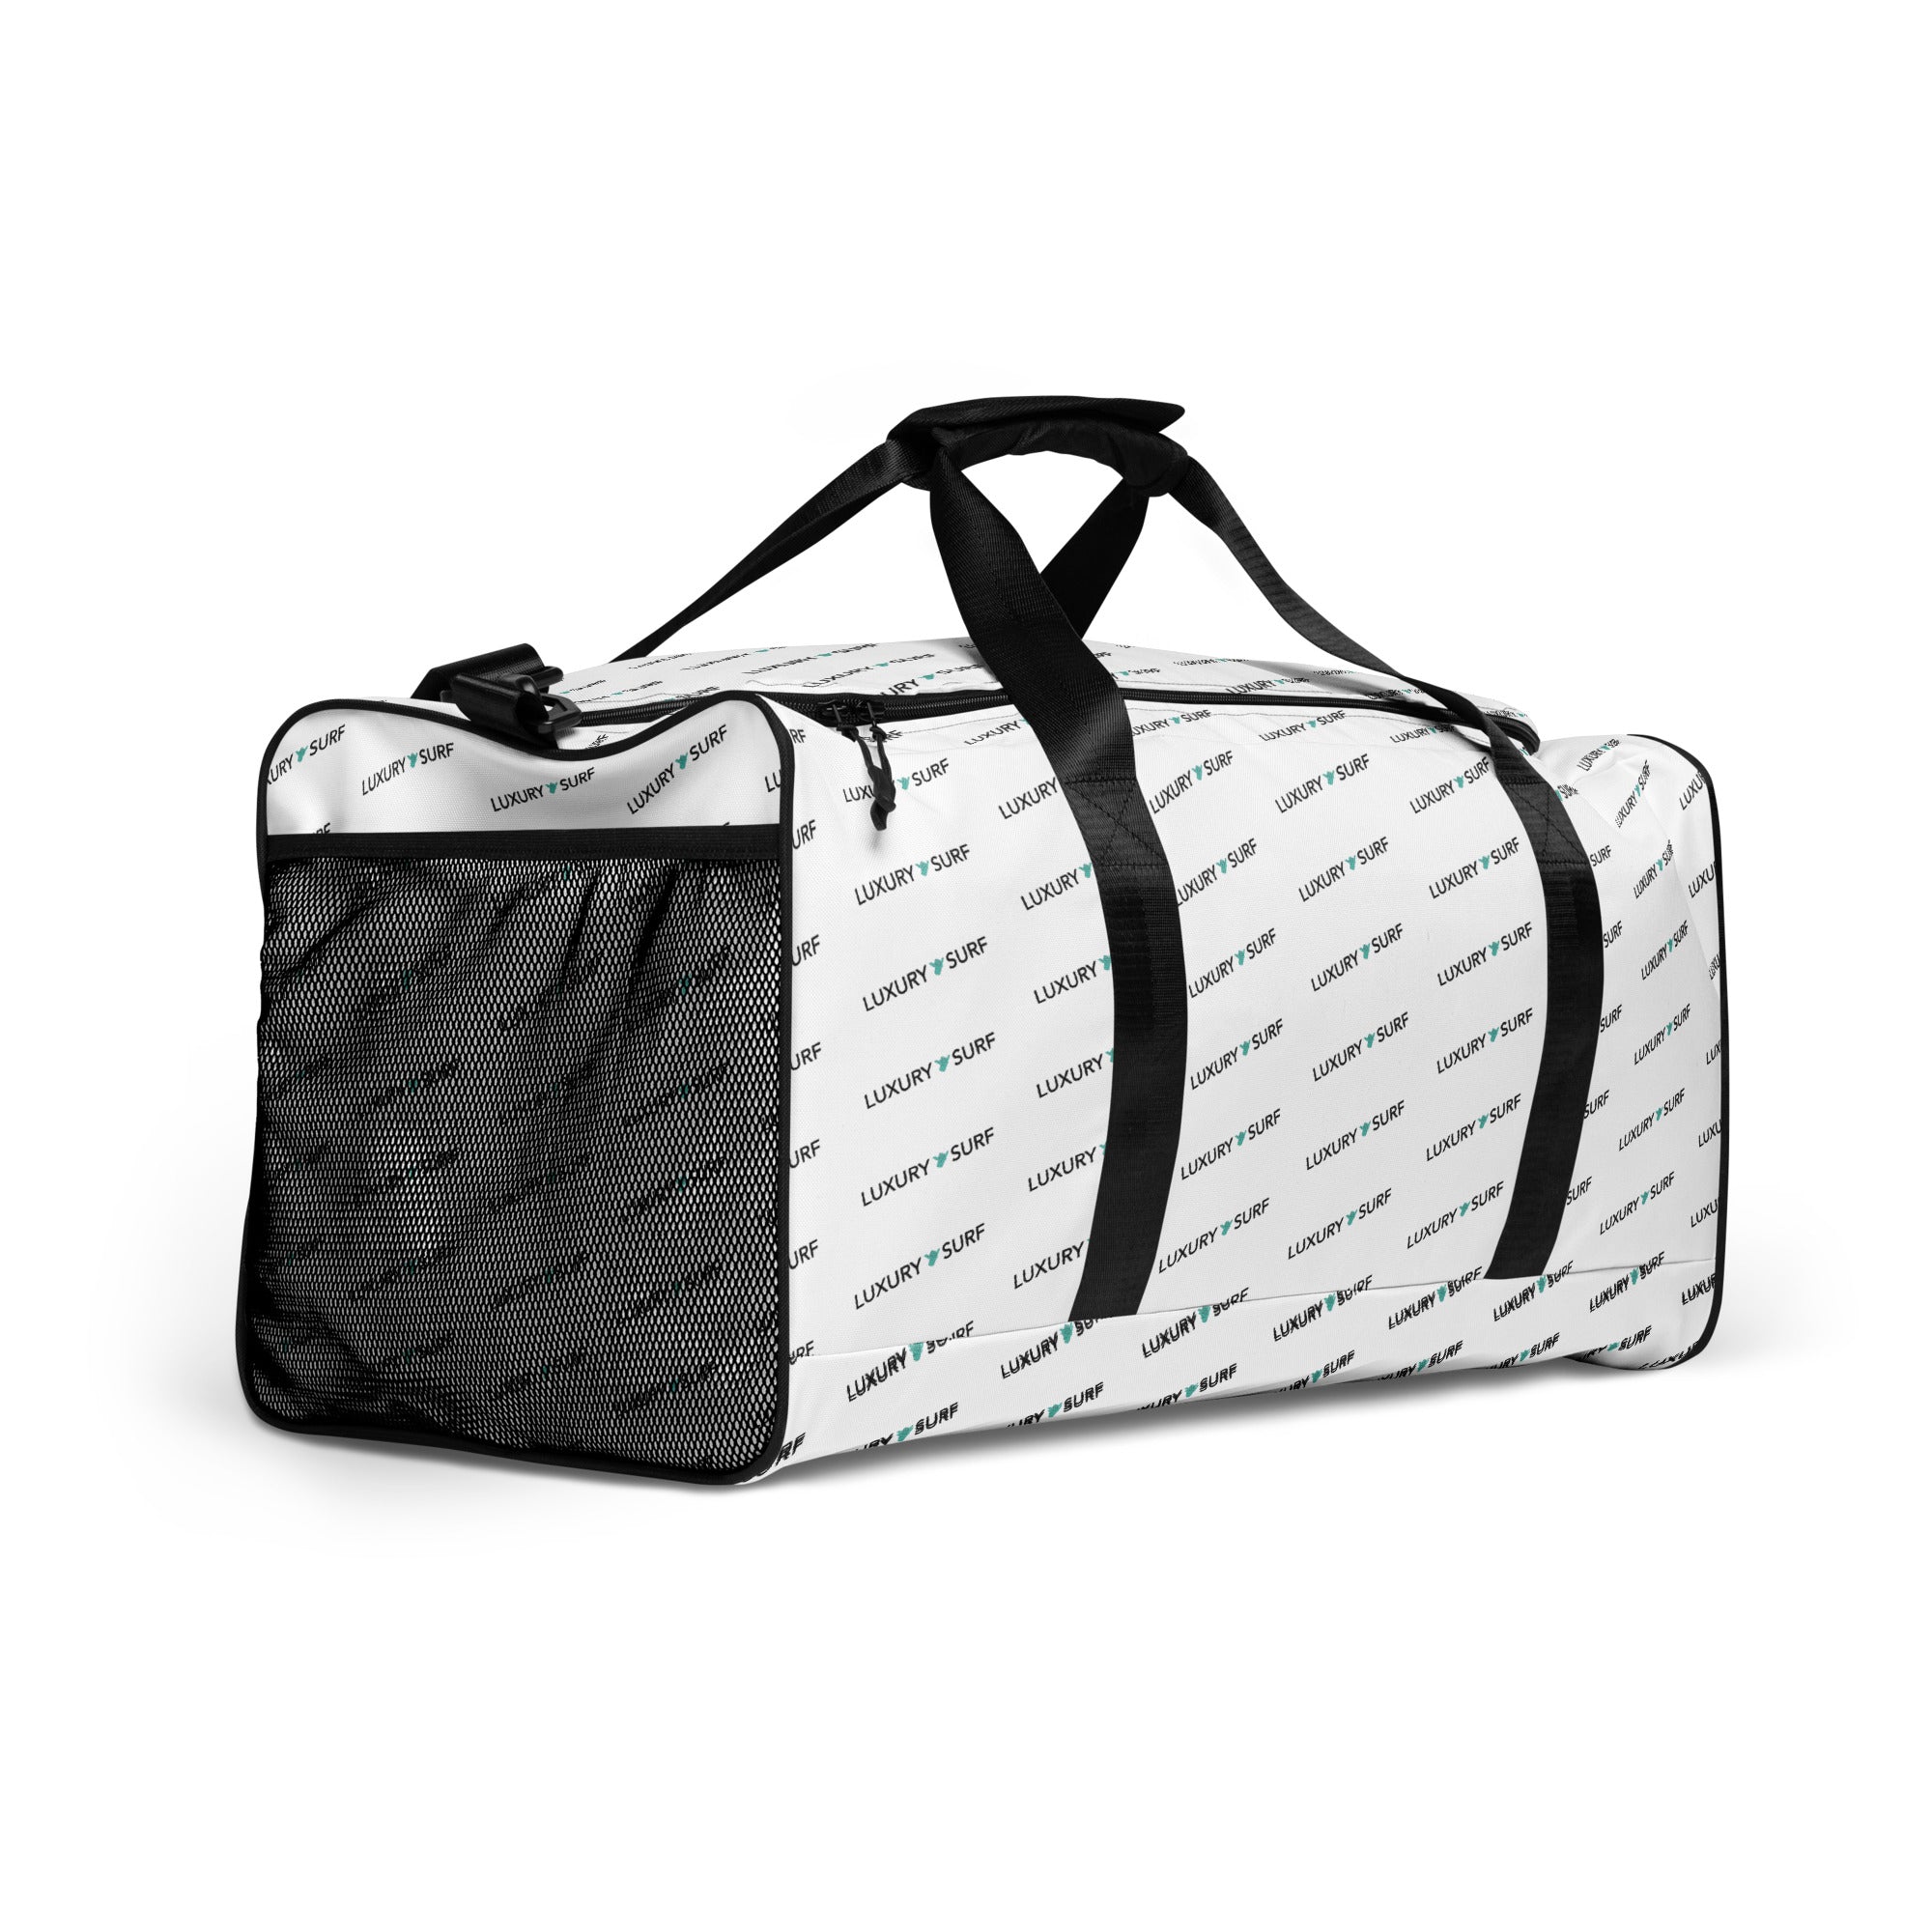 Luxury Surf Duffle Bag